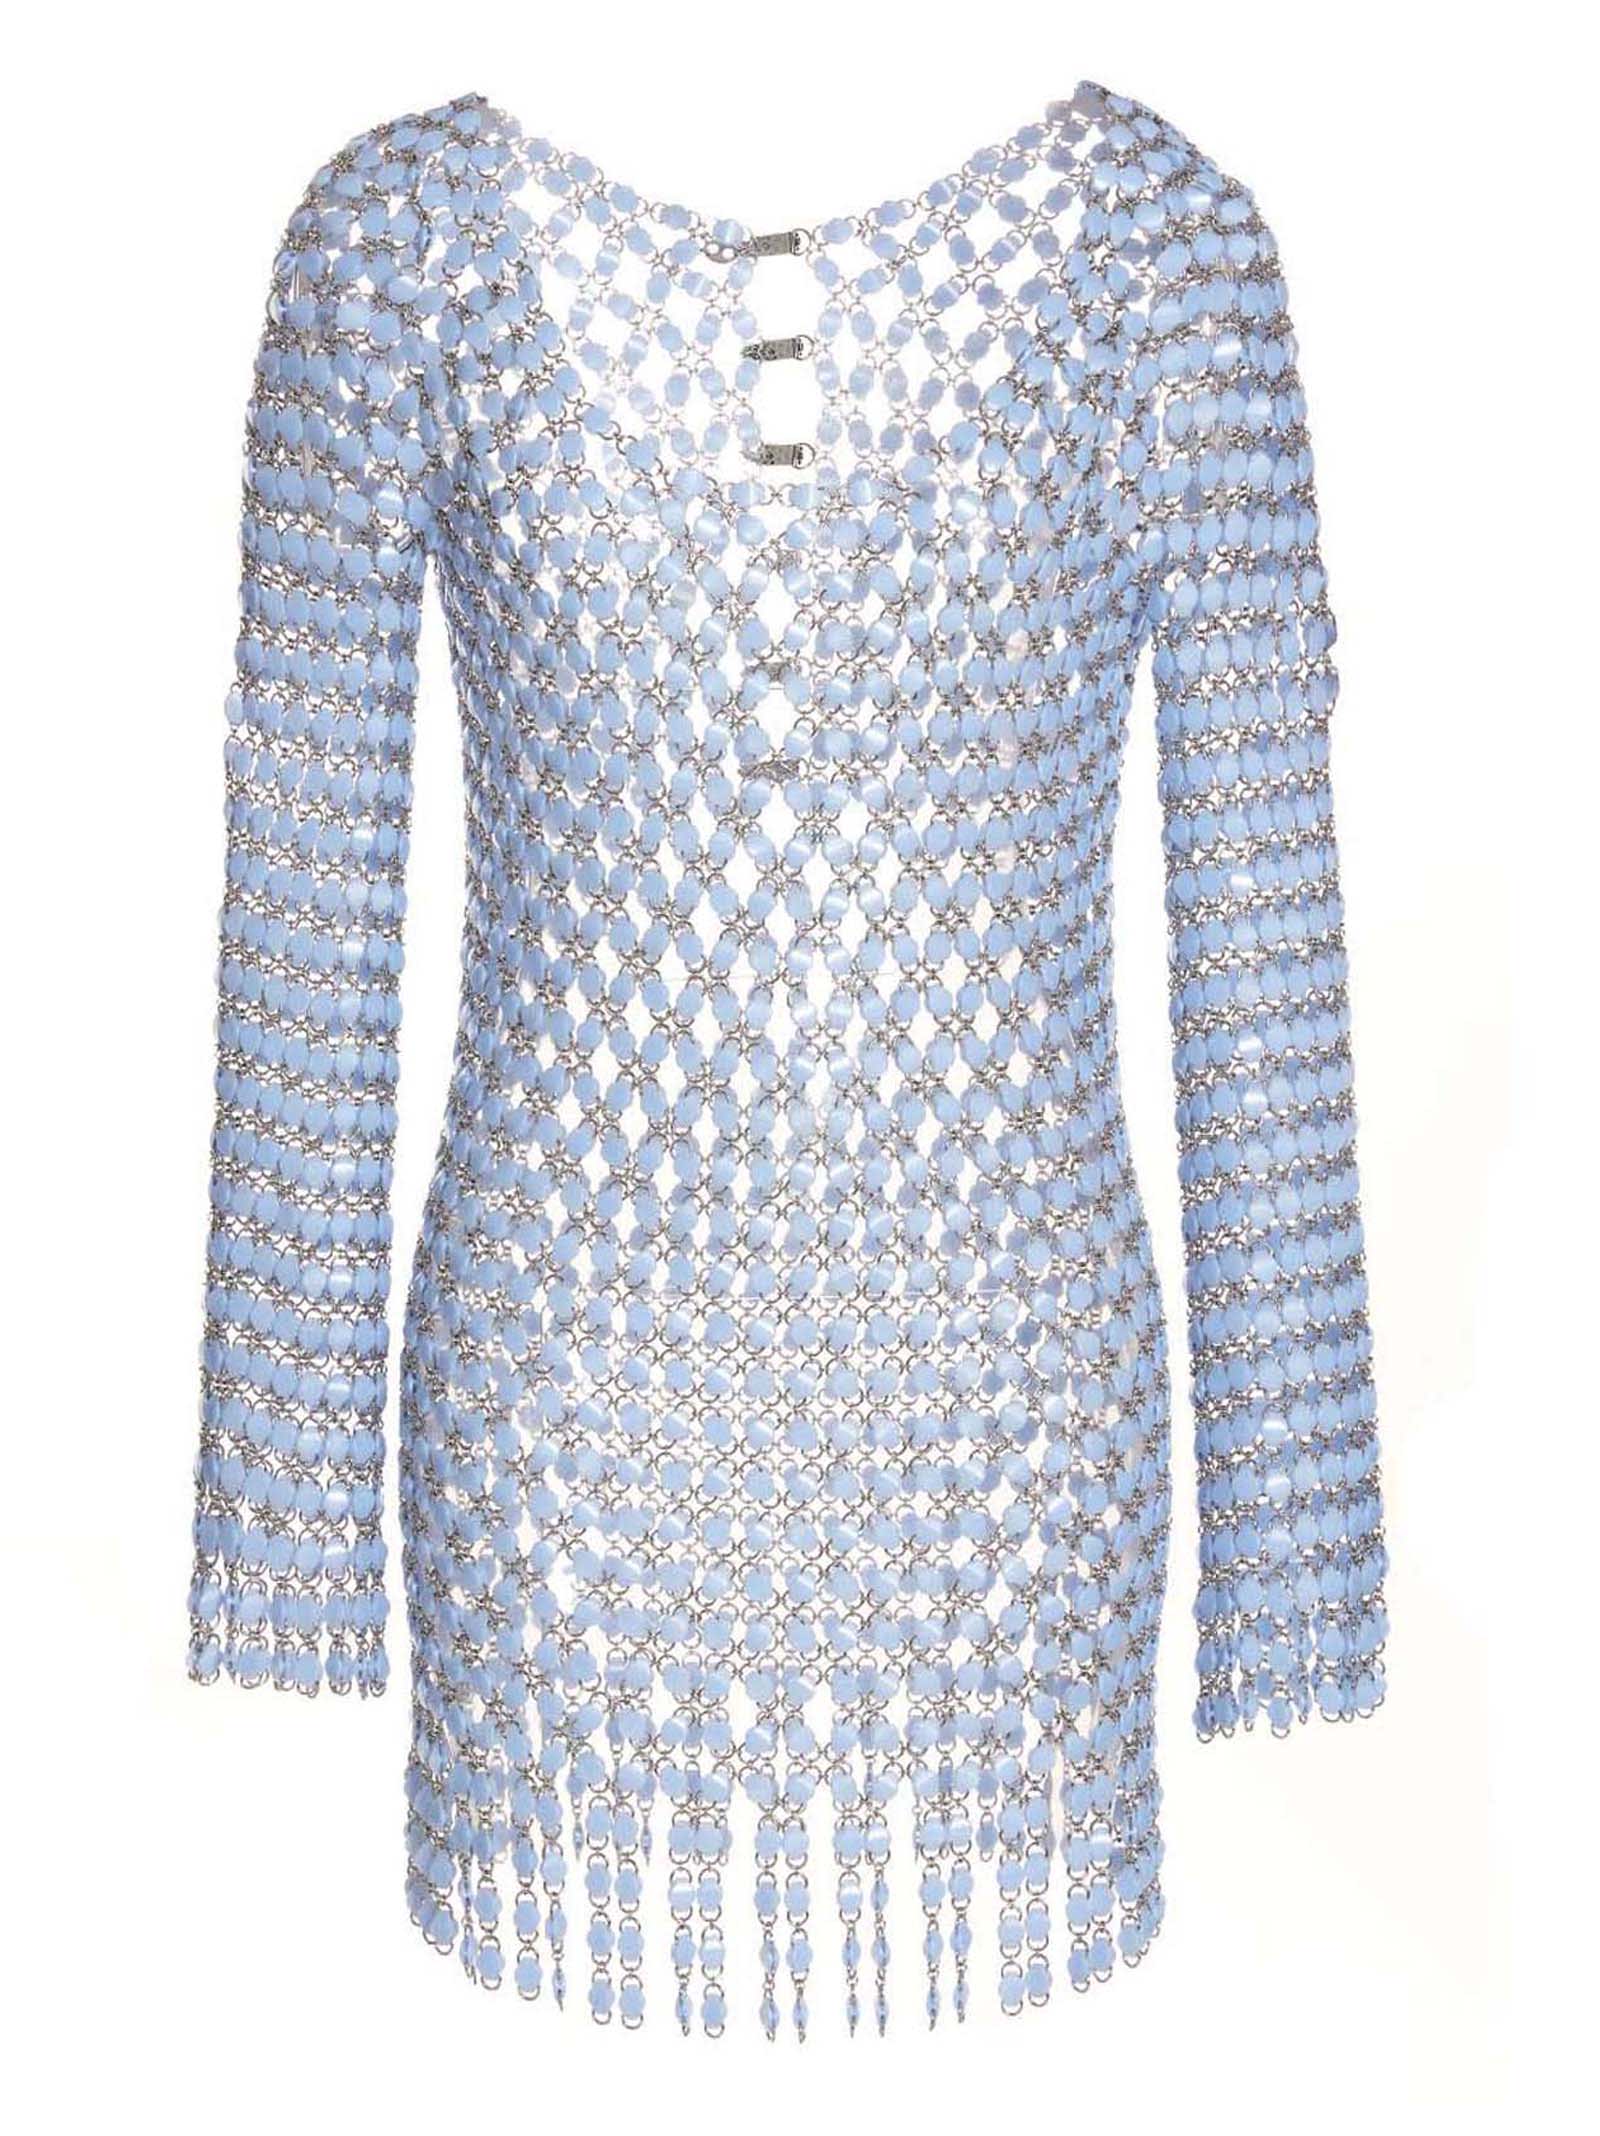 Acrylic Knit Dress